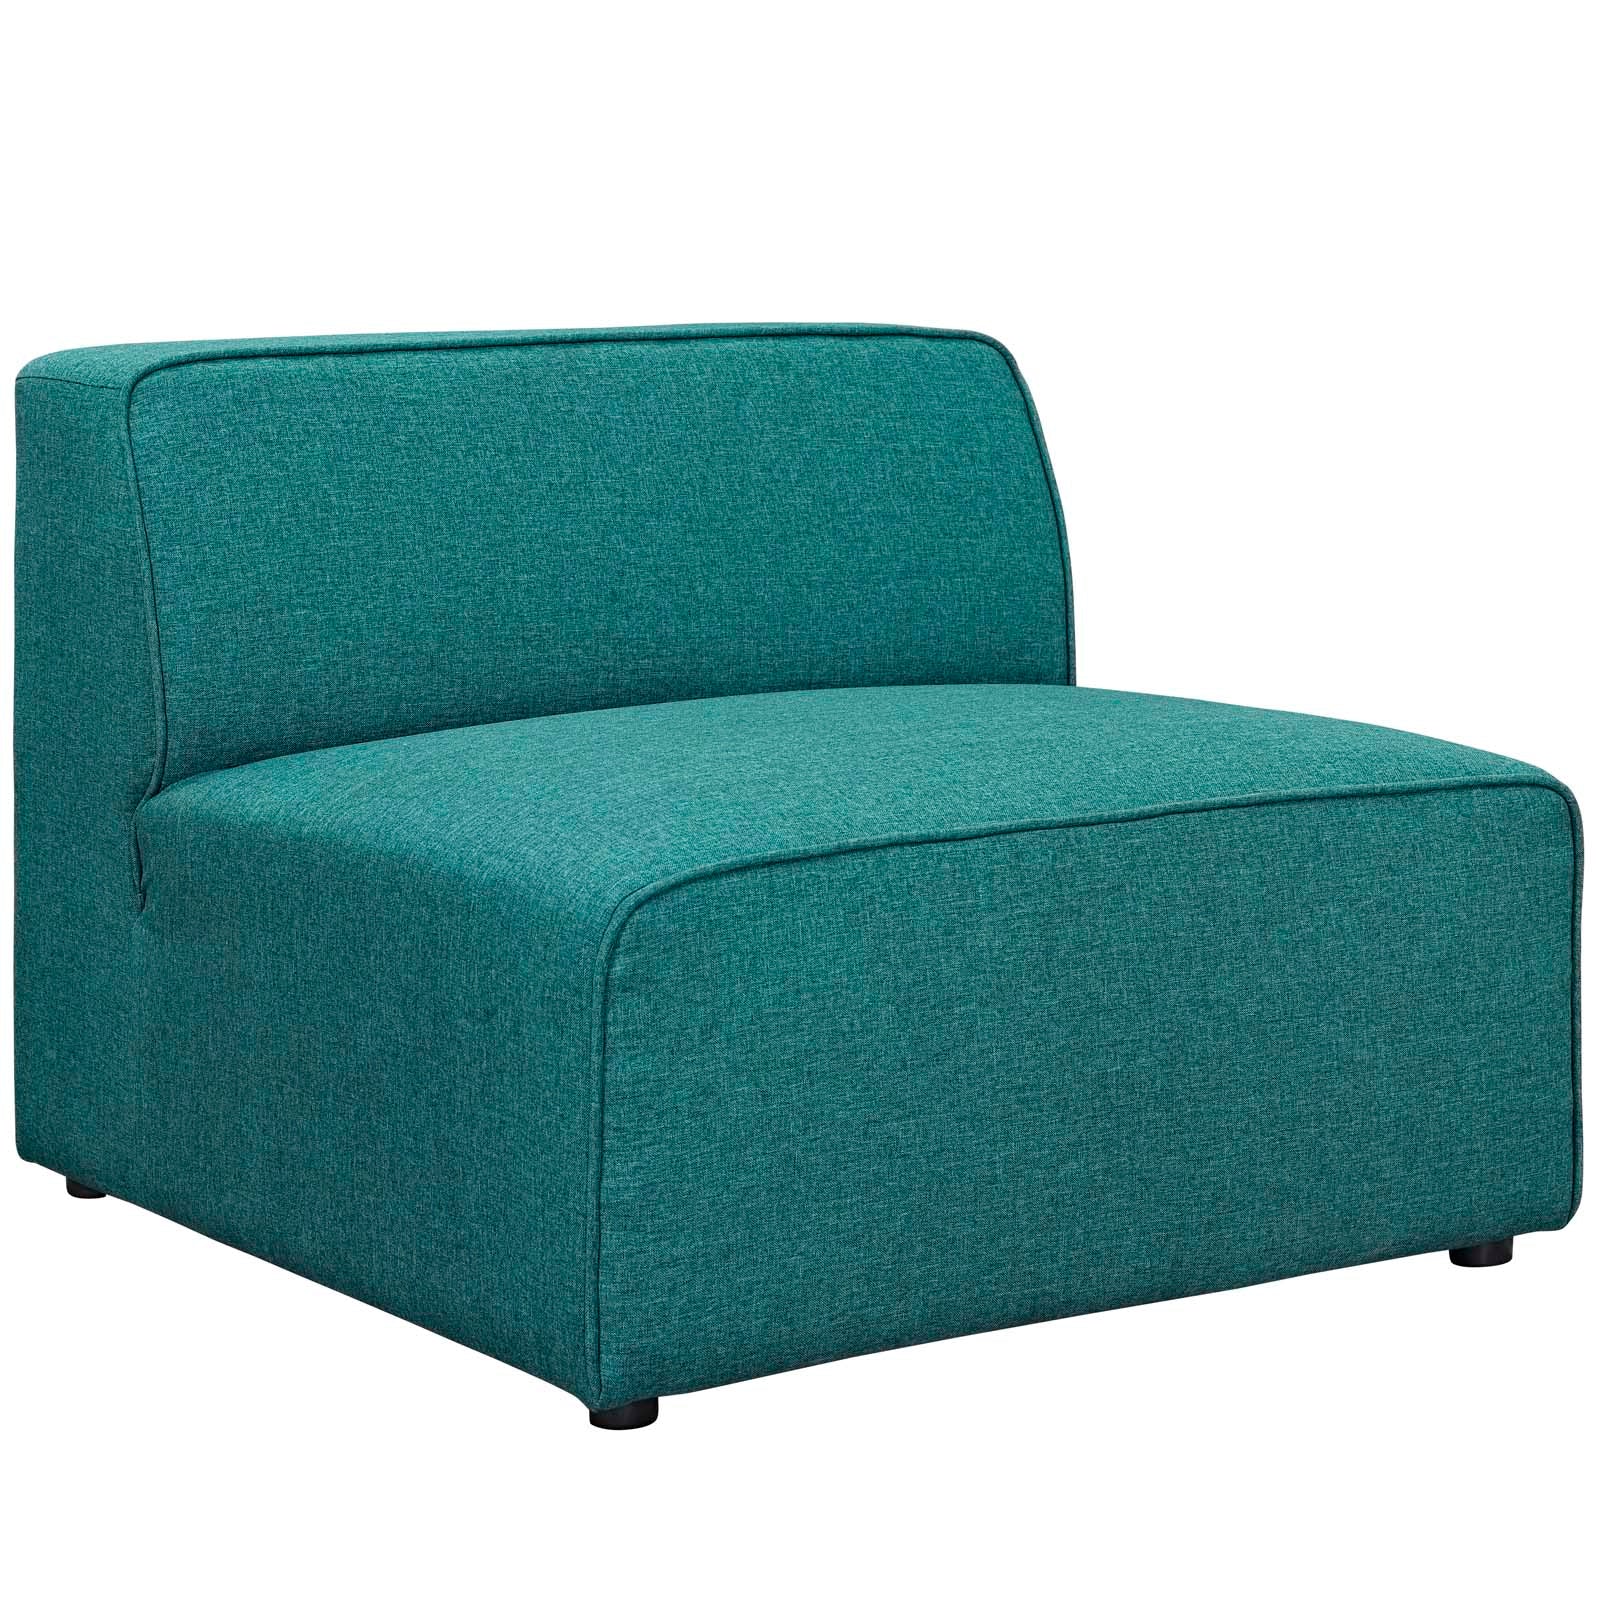 Mingle 7 Piece Upholstered Fabric Sectional Sofa Set - East Shore Modern Home Furnishings